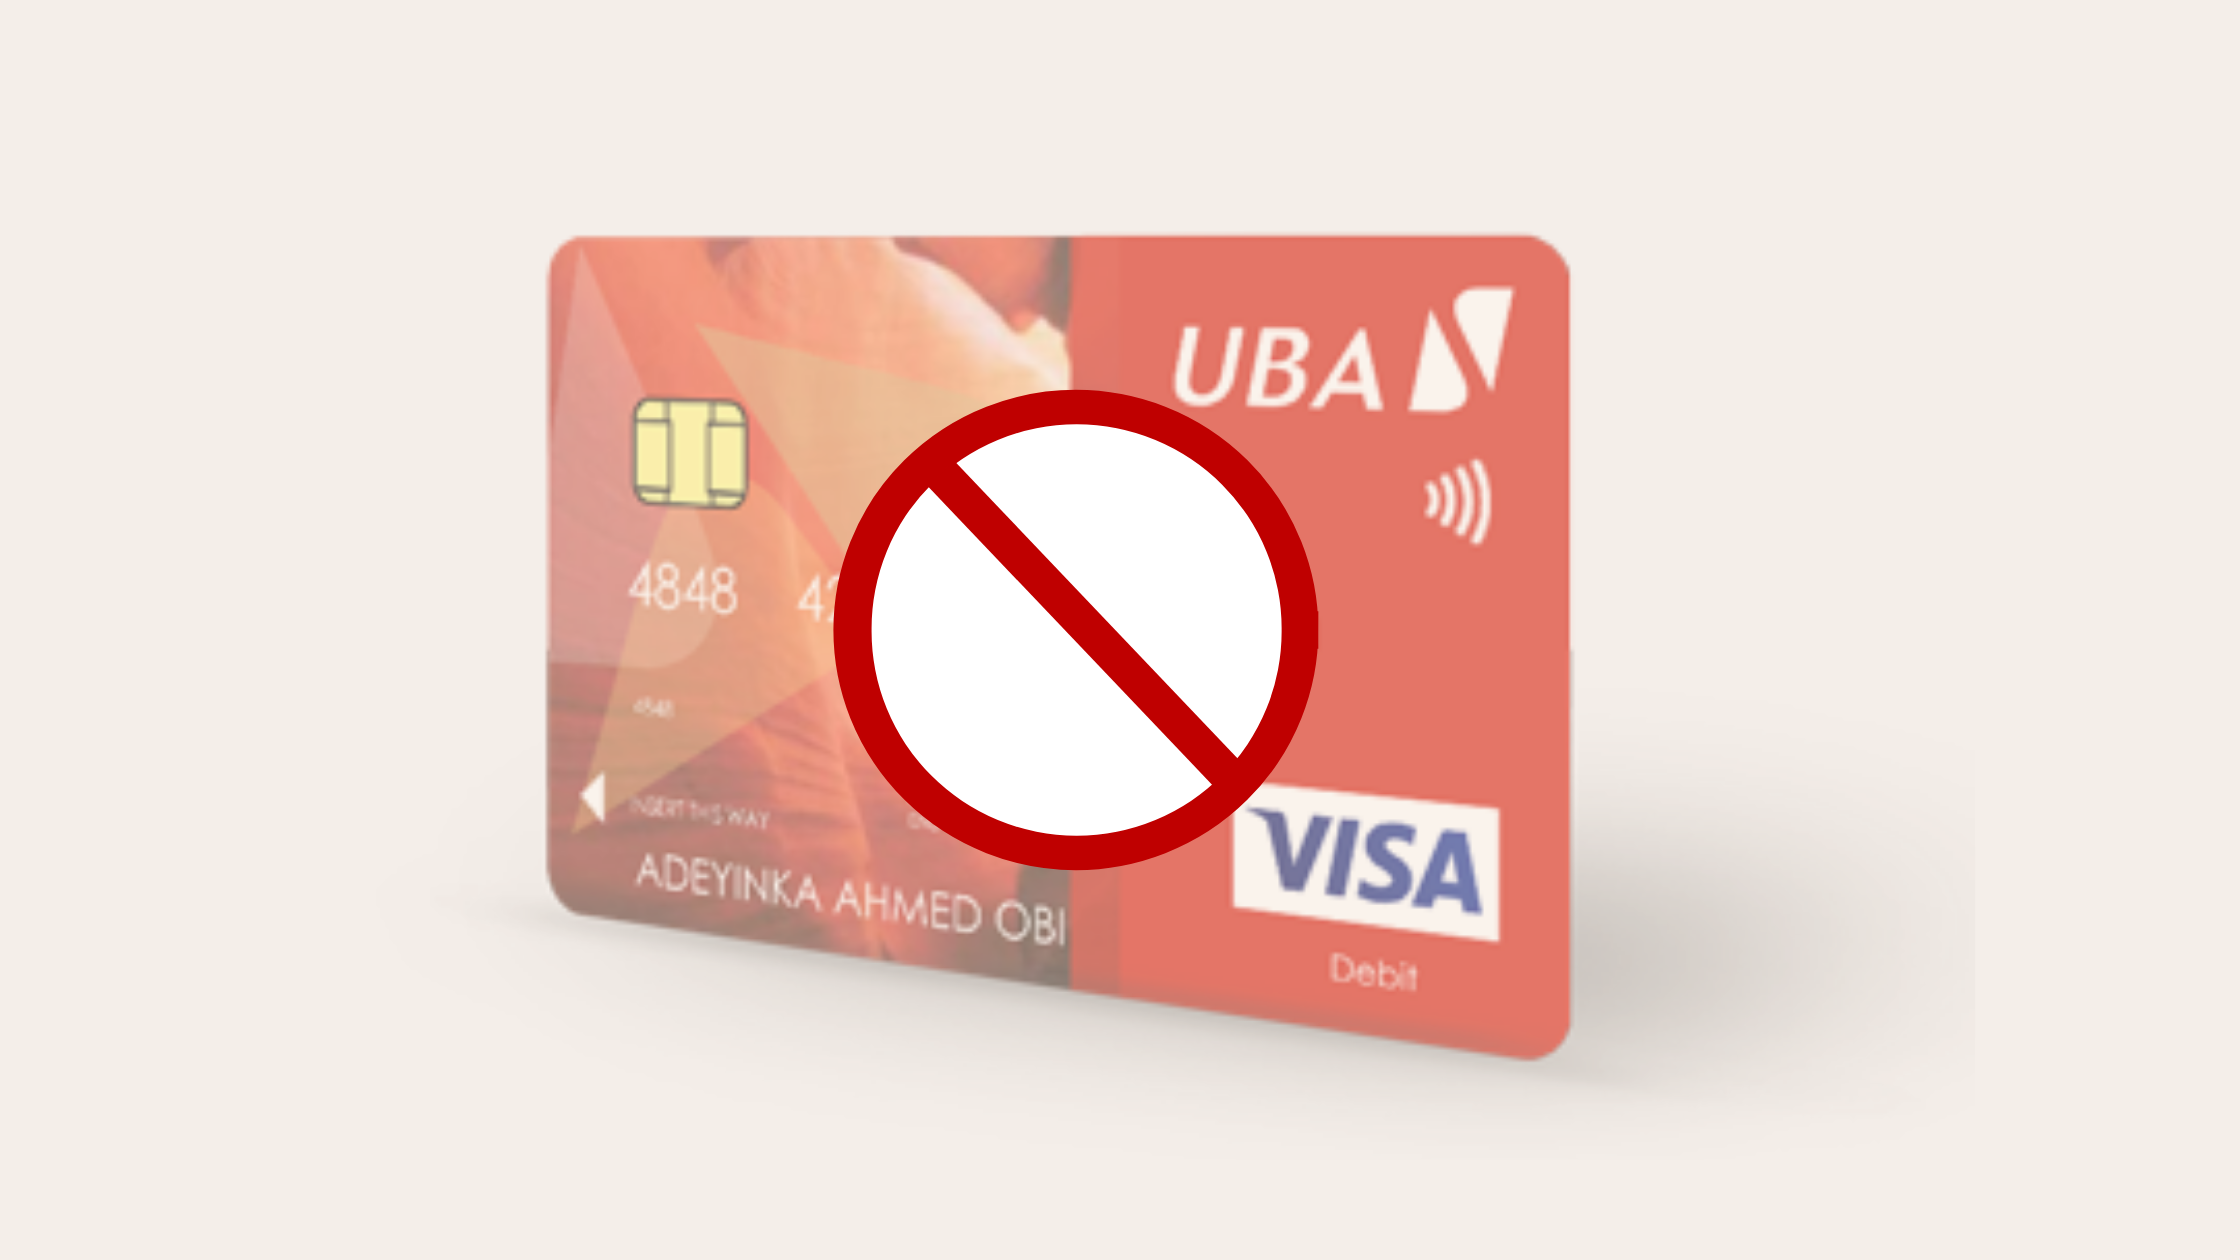 How to block UBA ATM card